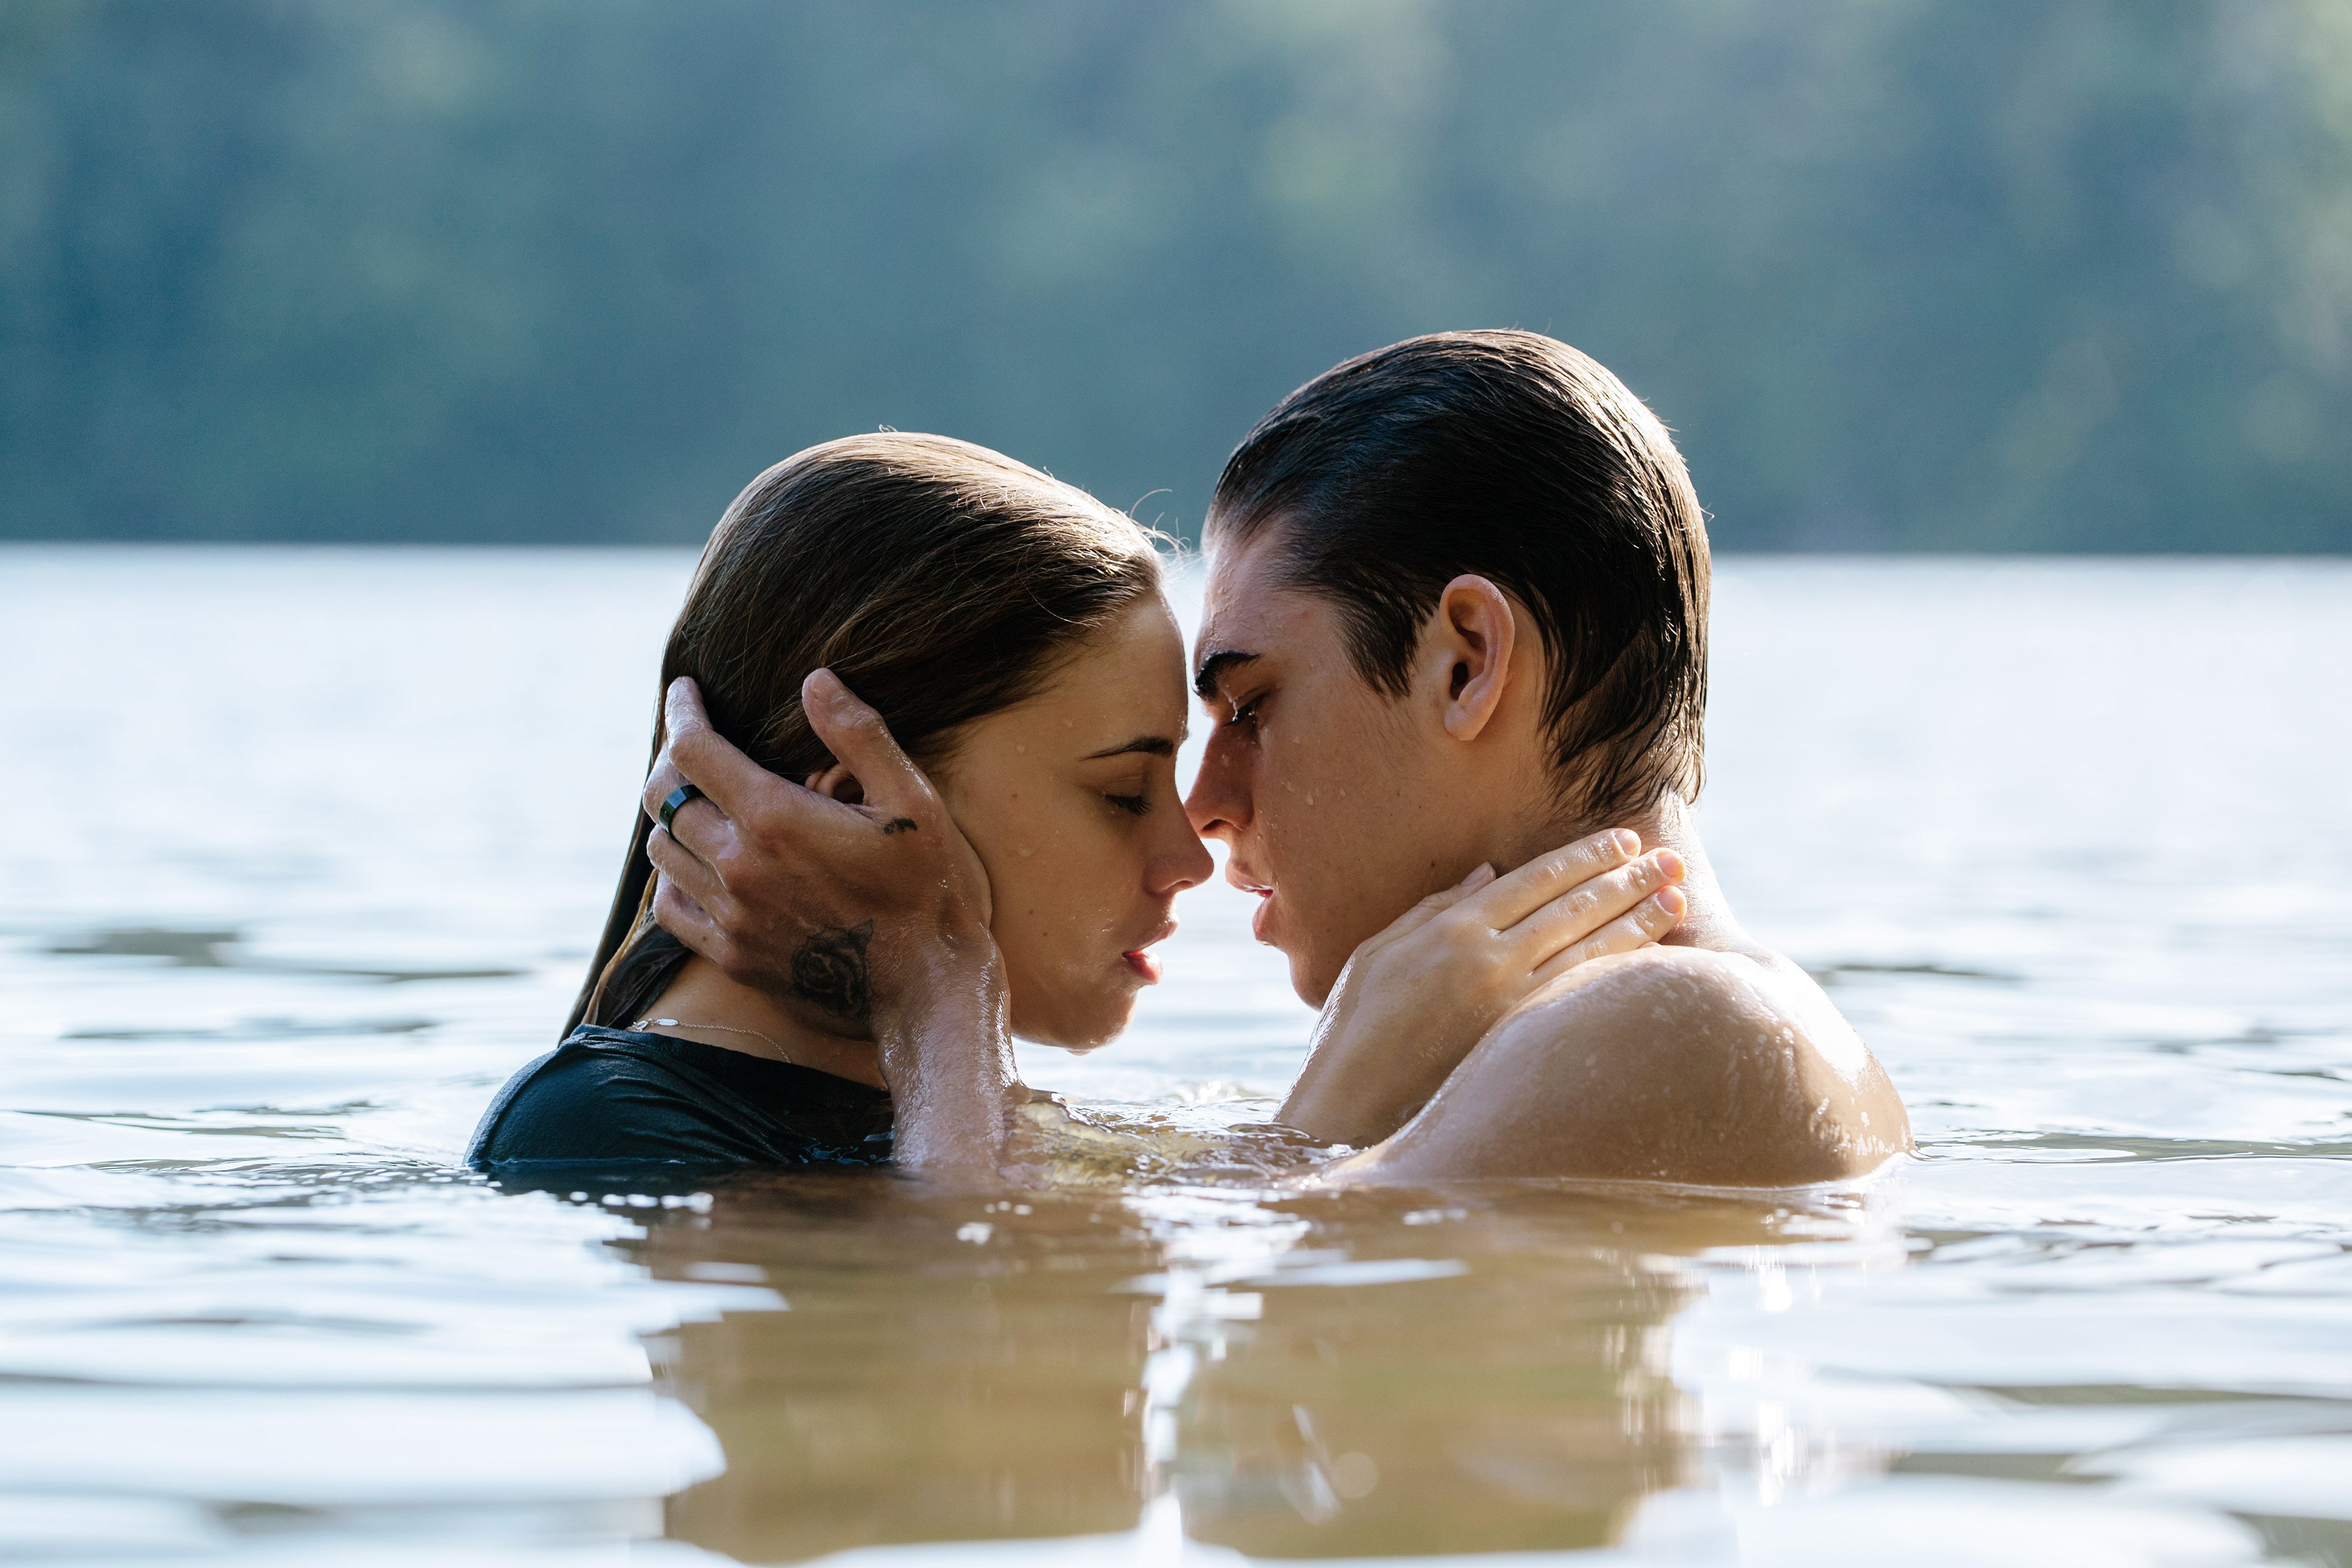 50 Best Romantic Movies on Netflix 2023 - Top Romance Films Streaming Now